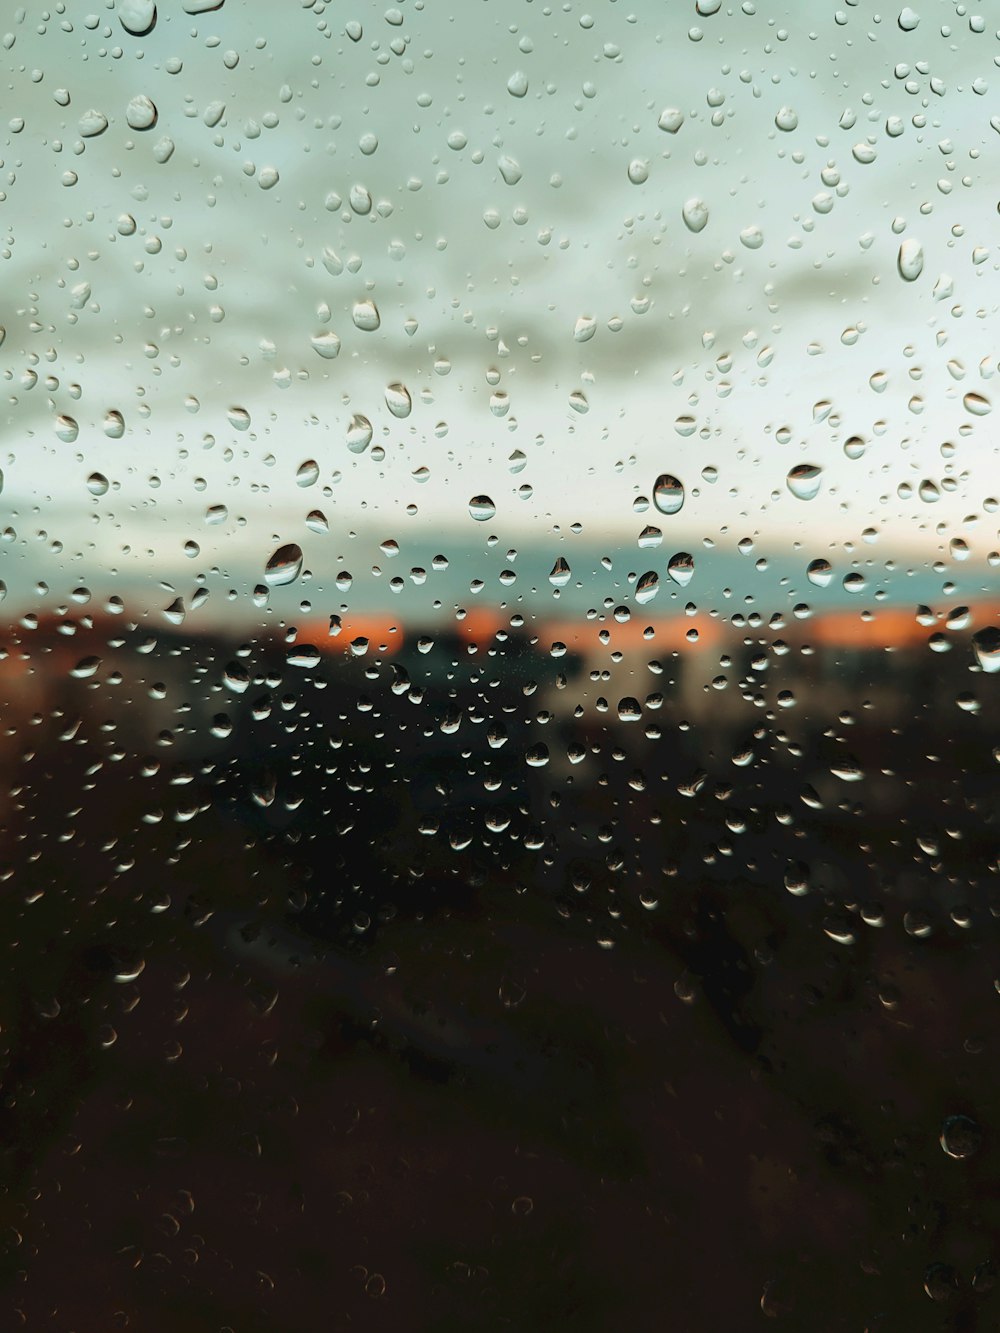 a window with rain drops on it